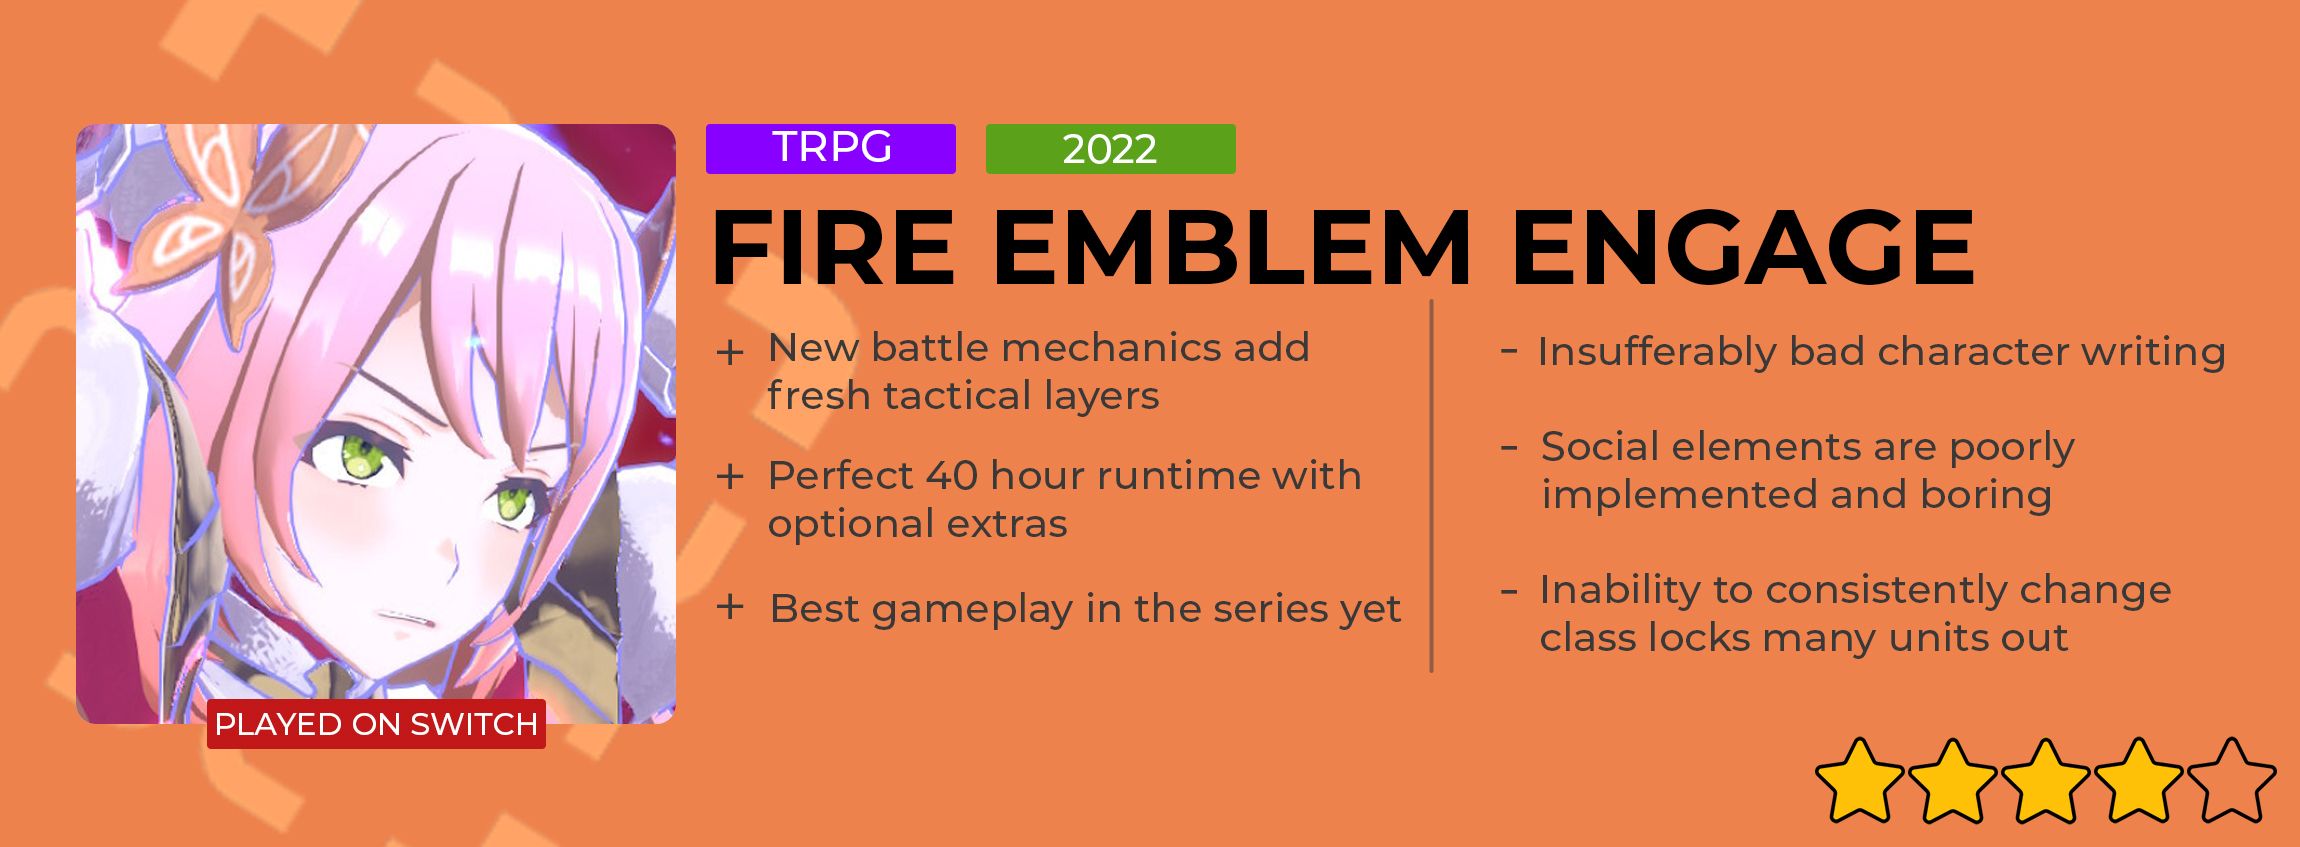 Fire Emblem Engage Review Card - score: 4/5